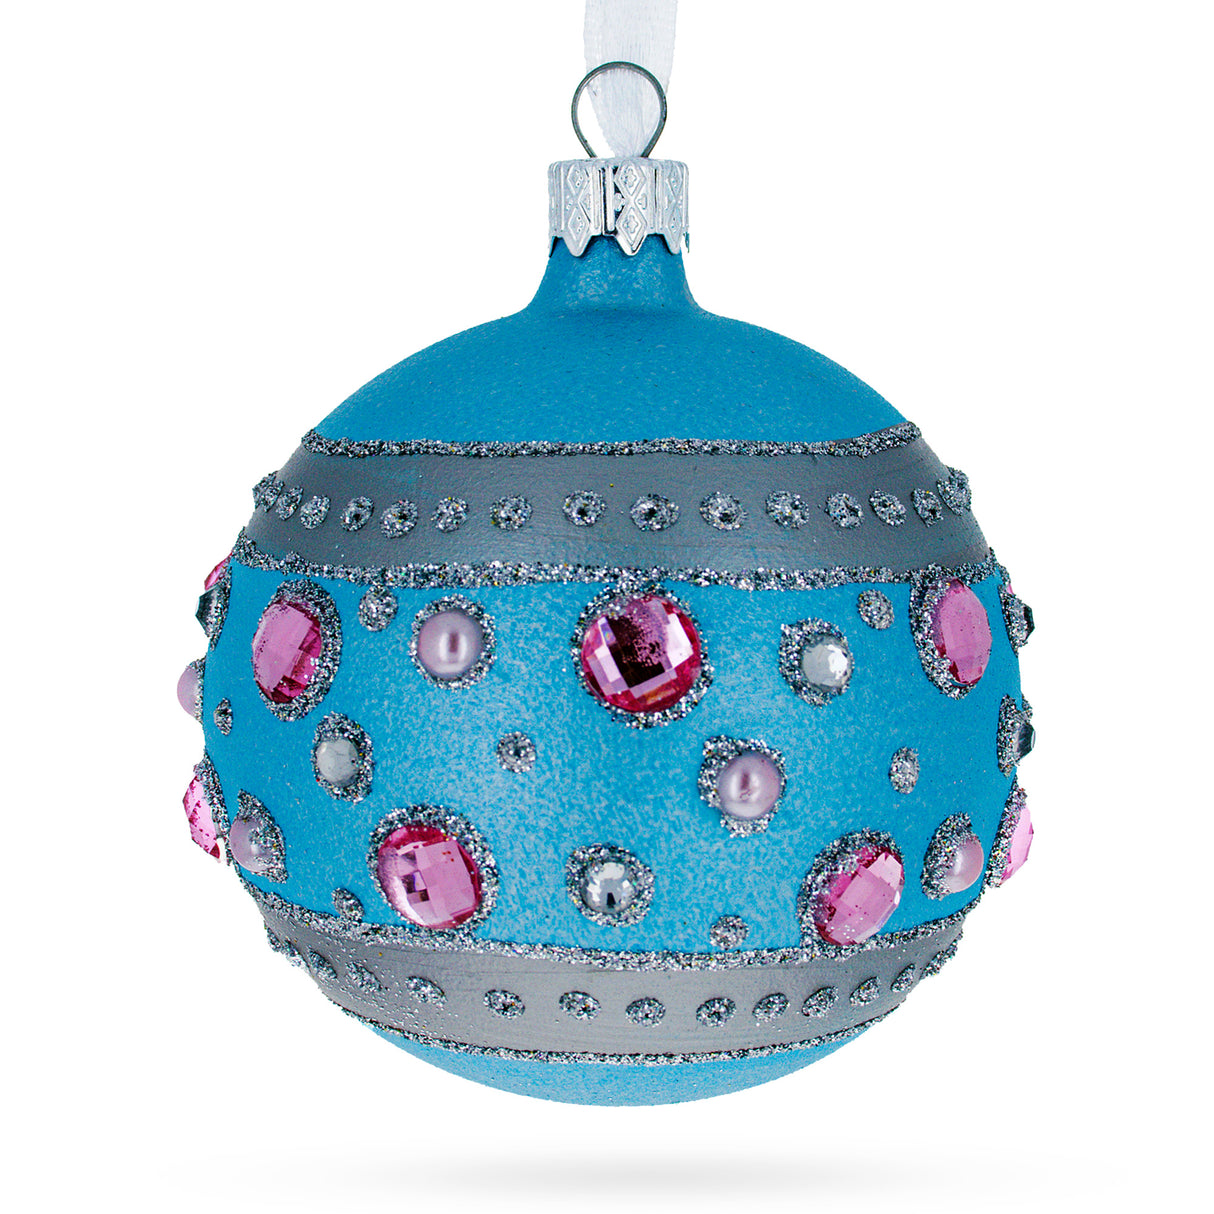 Opulent Elegance: Sapphires and Diamonds Art Nouveau Design Blown Glass Ball Christmas Ornament 3.25 Inches in Blue color, Round shape